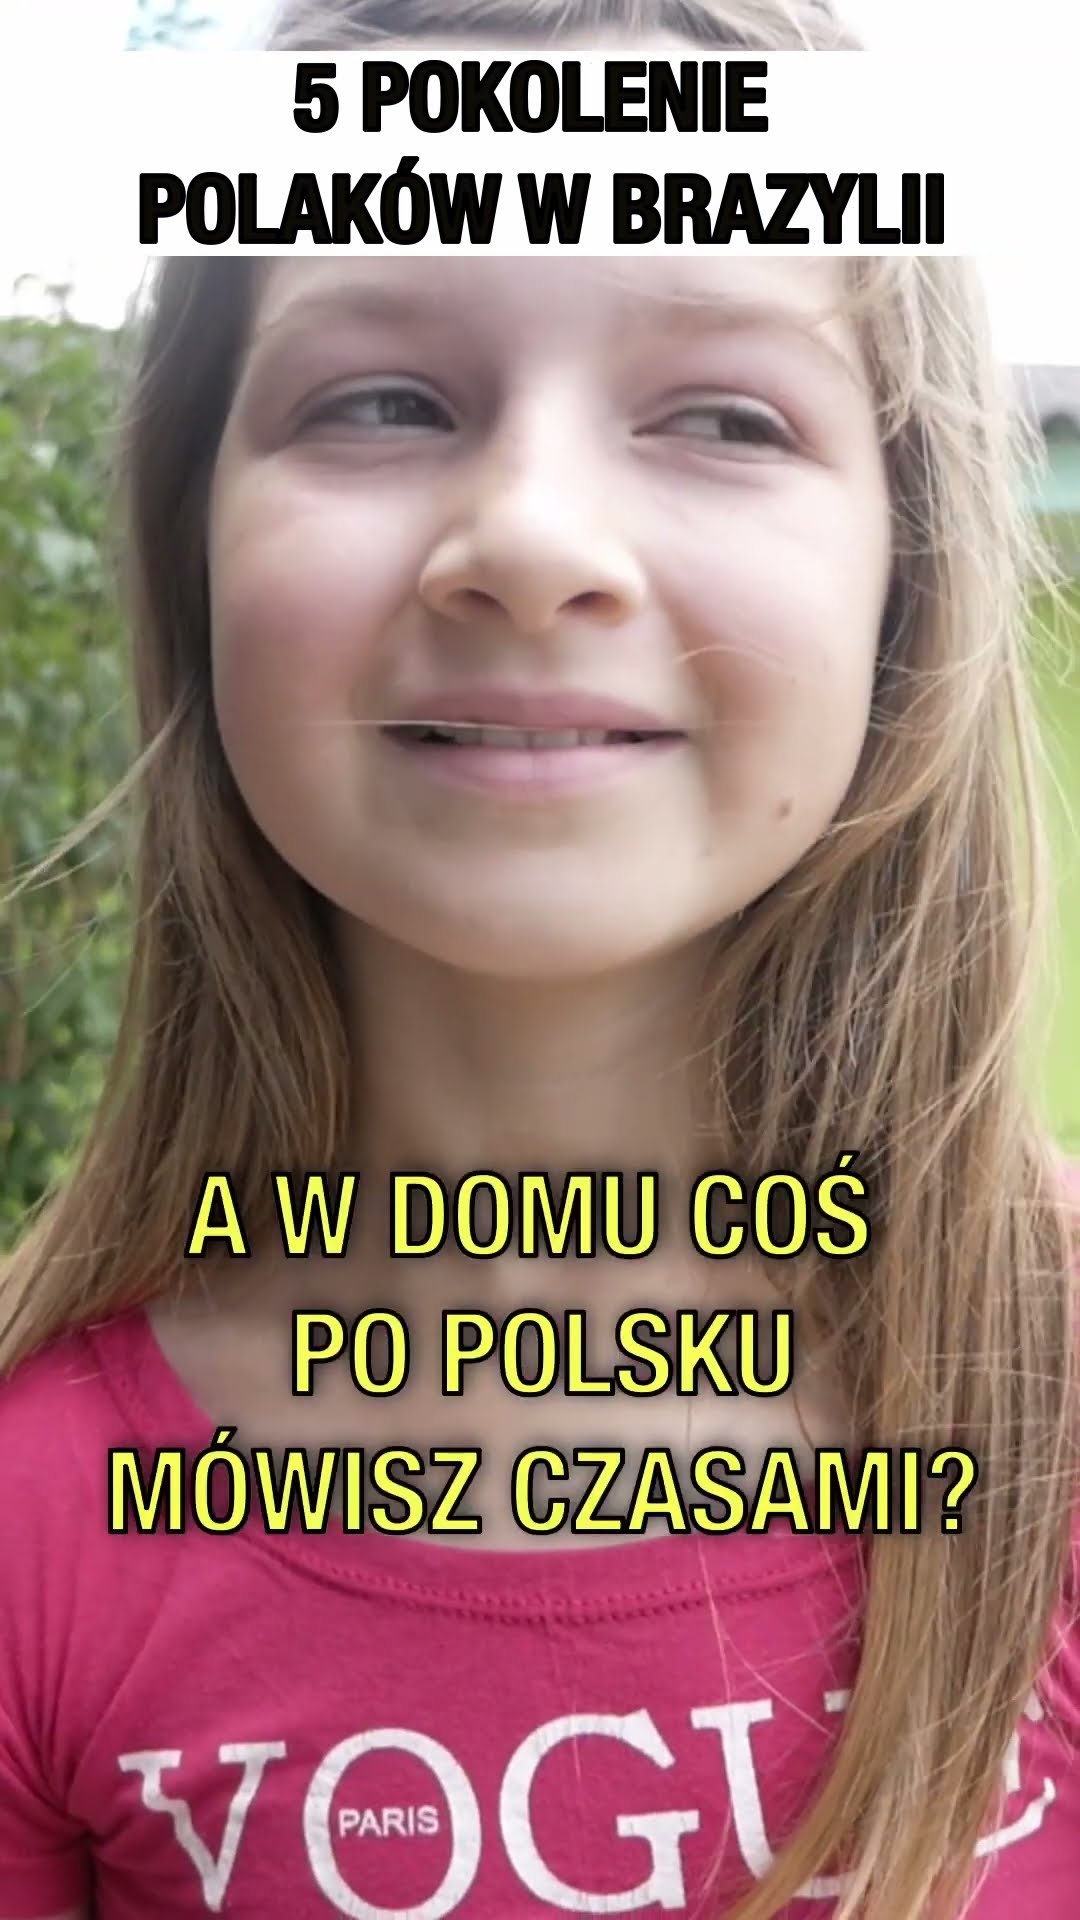 Diho - Polak (prod. Majki) [Official Video]